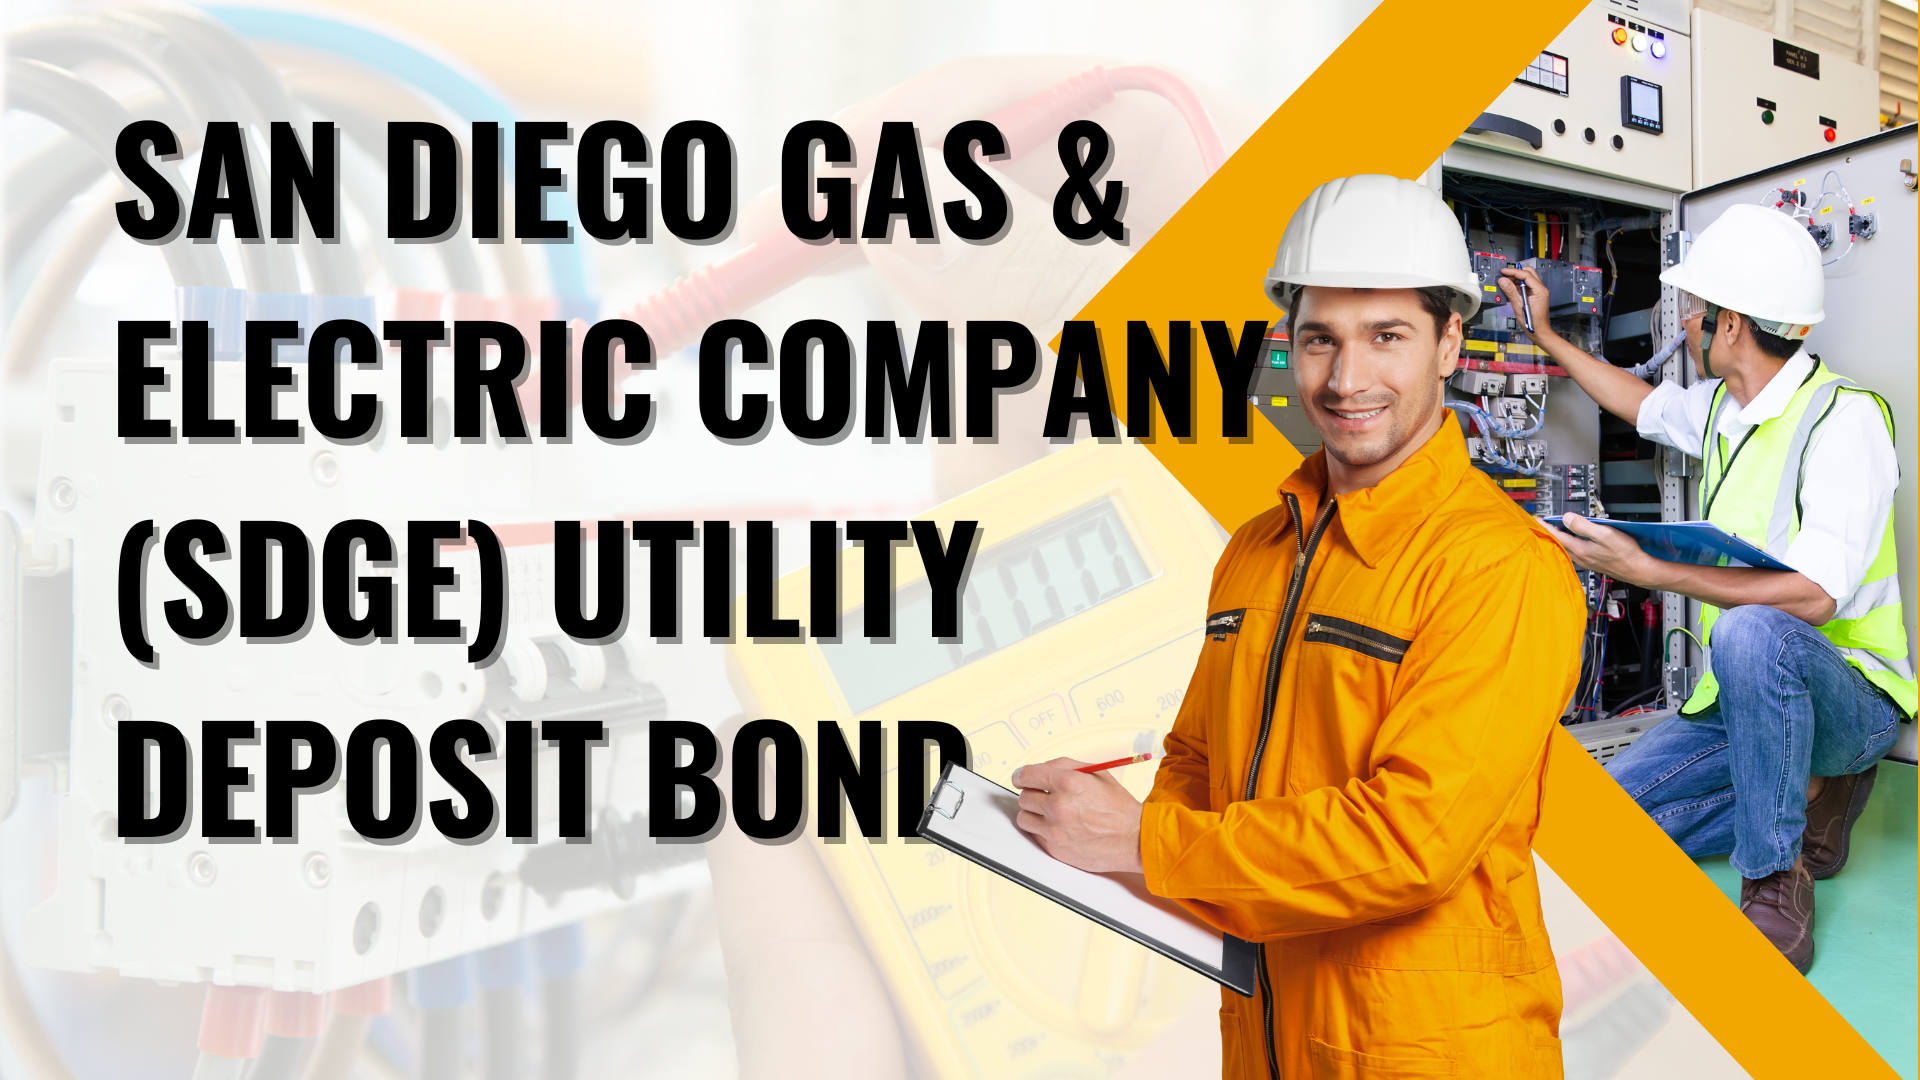 Surety Bond-San Diego Gas & Electric Company Utility Deposit Bond